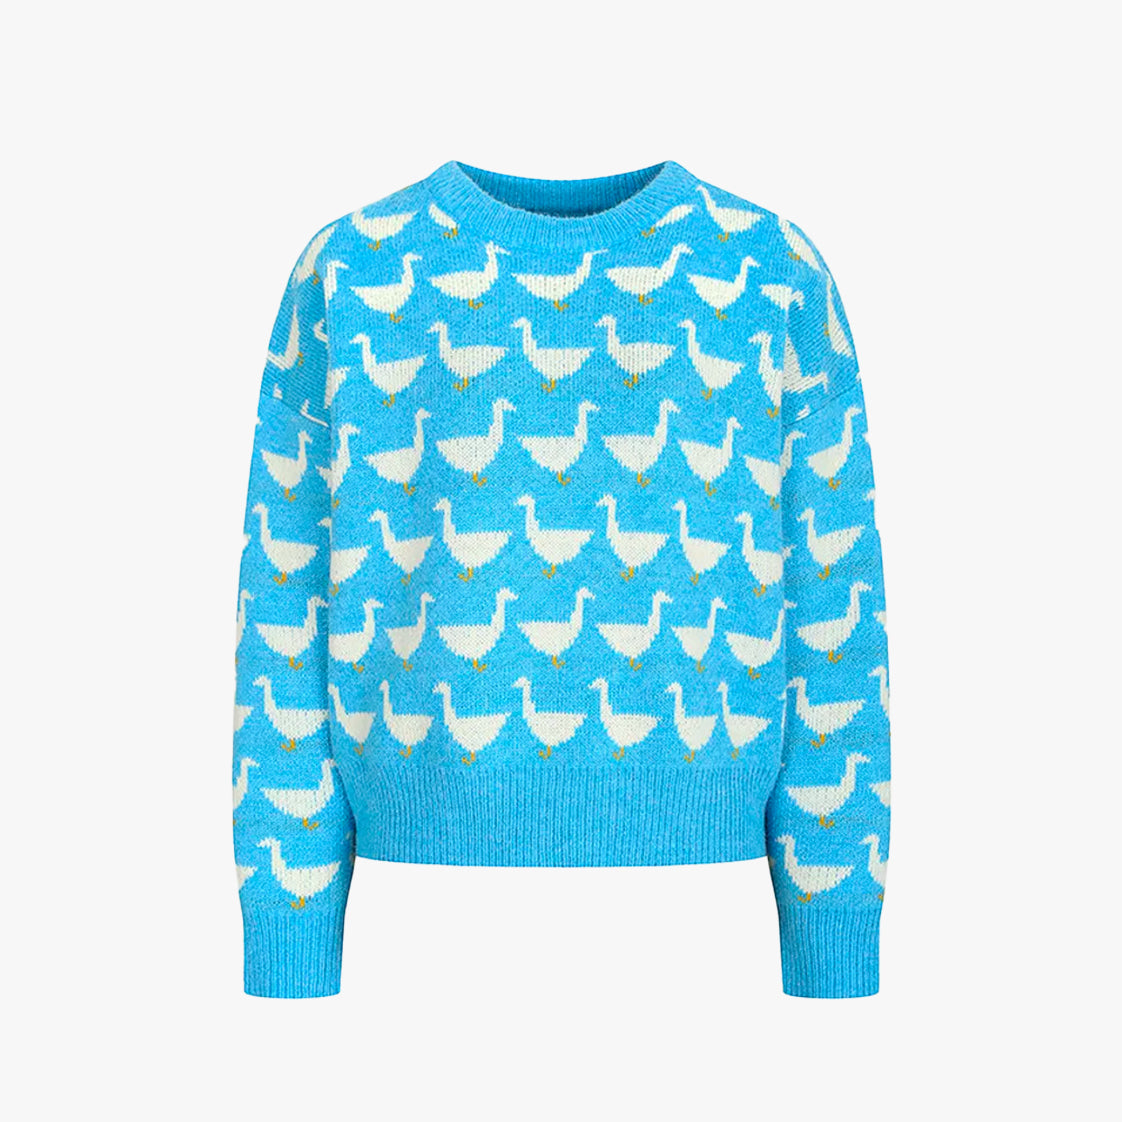 Aesthetic Duckie Knit Sweater